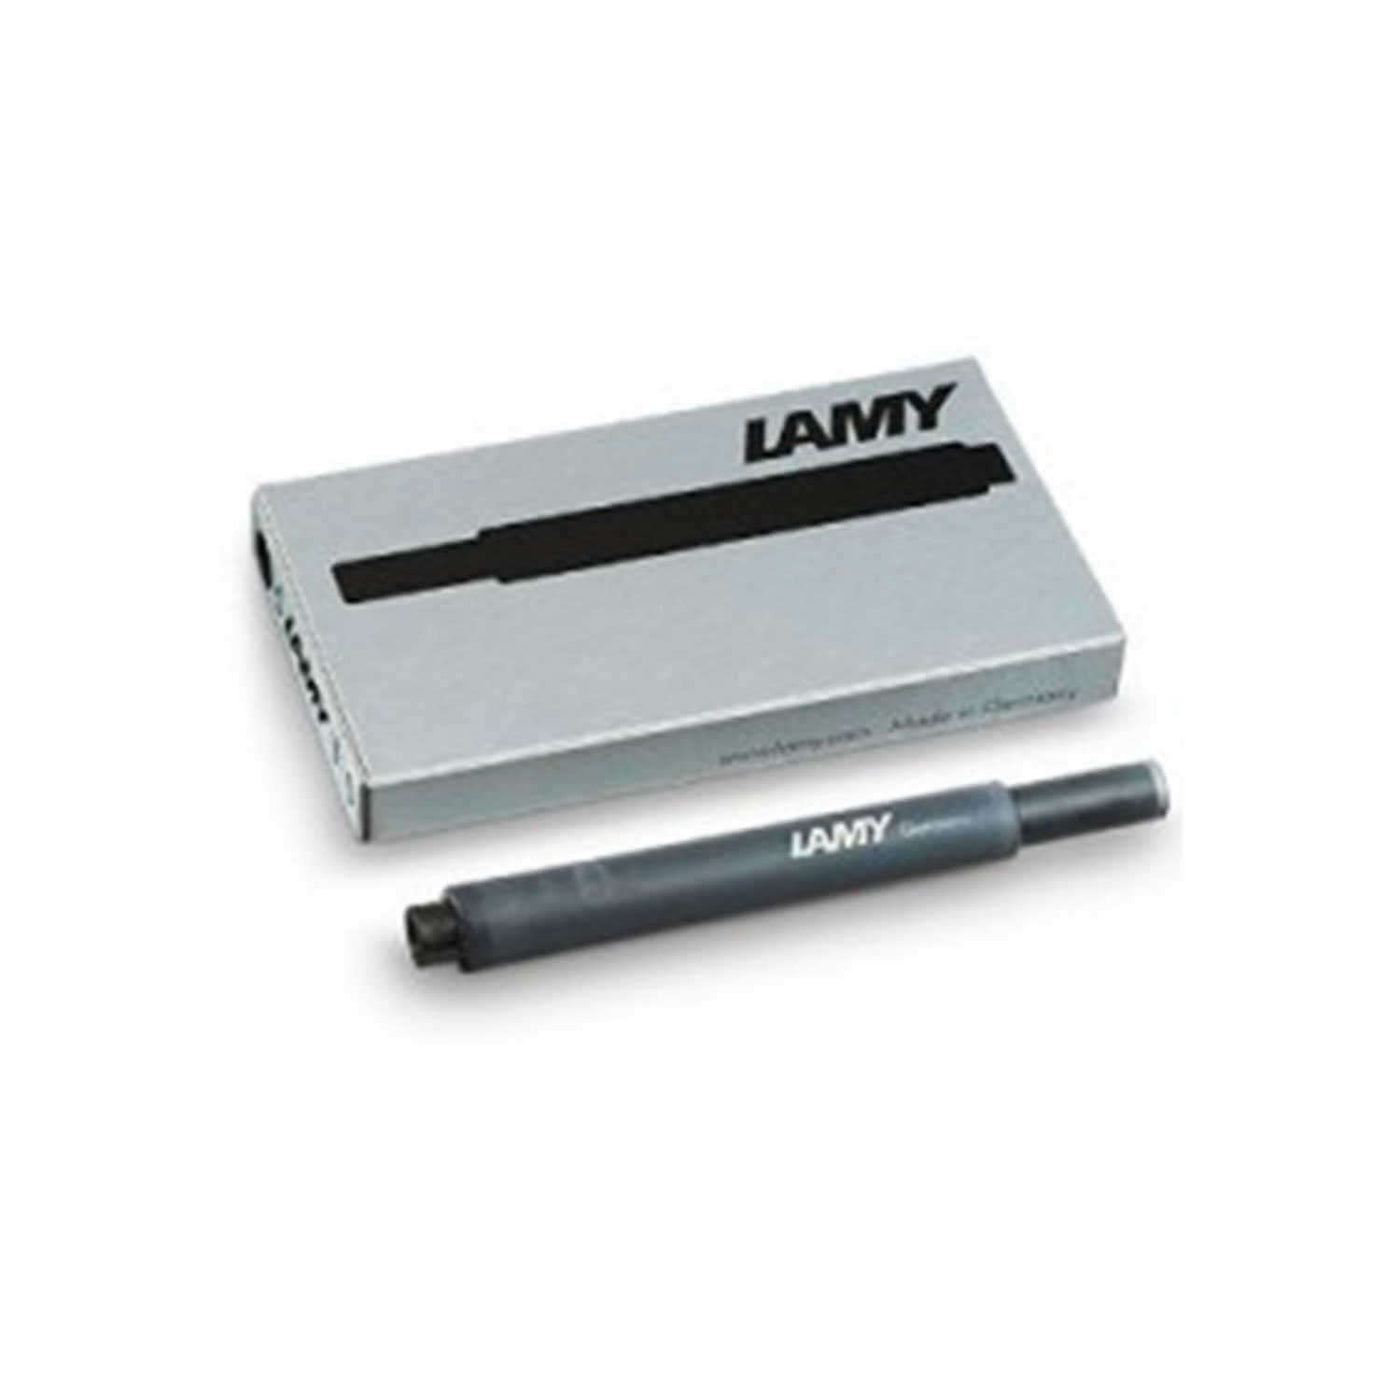 Lamy T10 Ink Cartridge Pack of 5 - Black